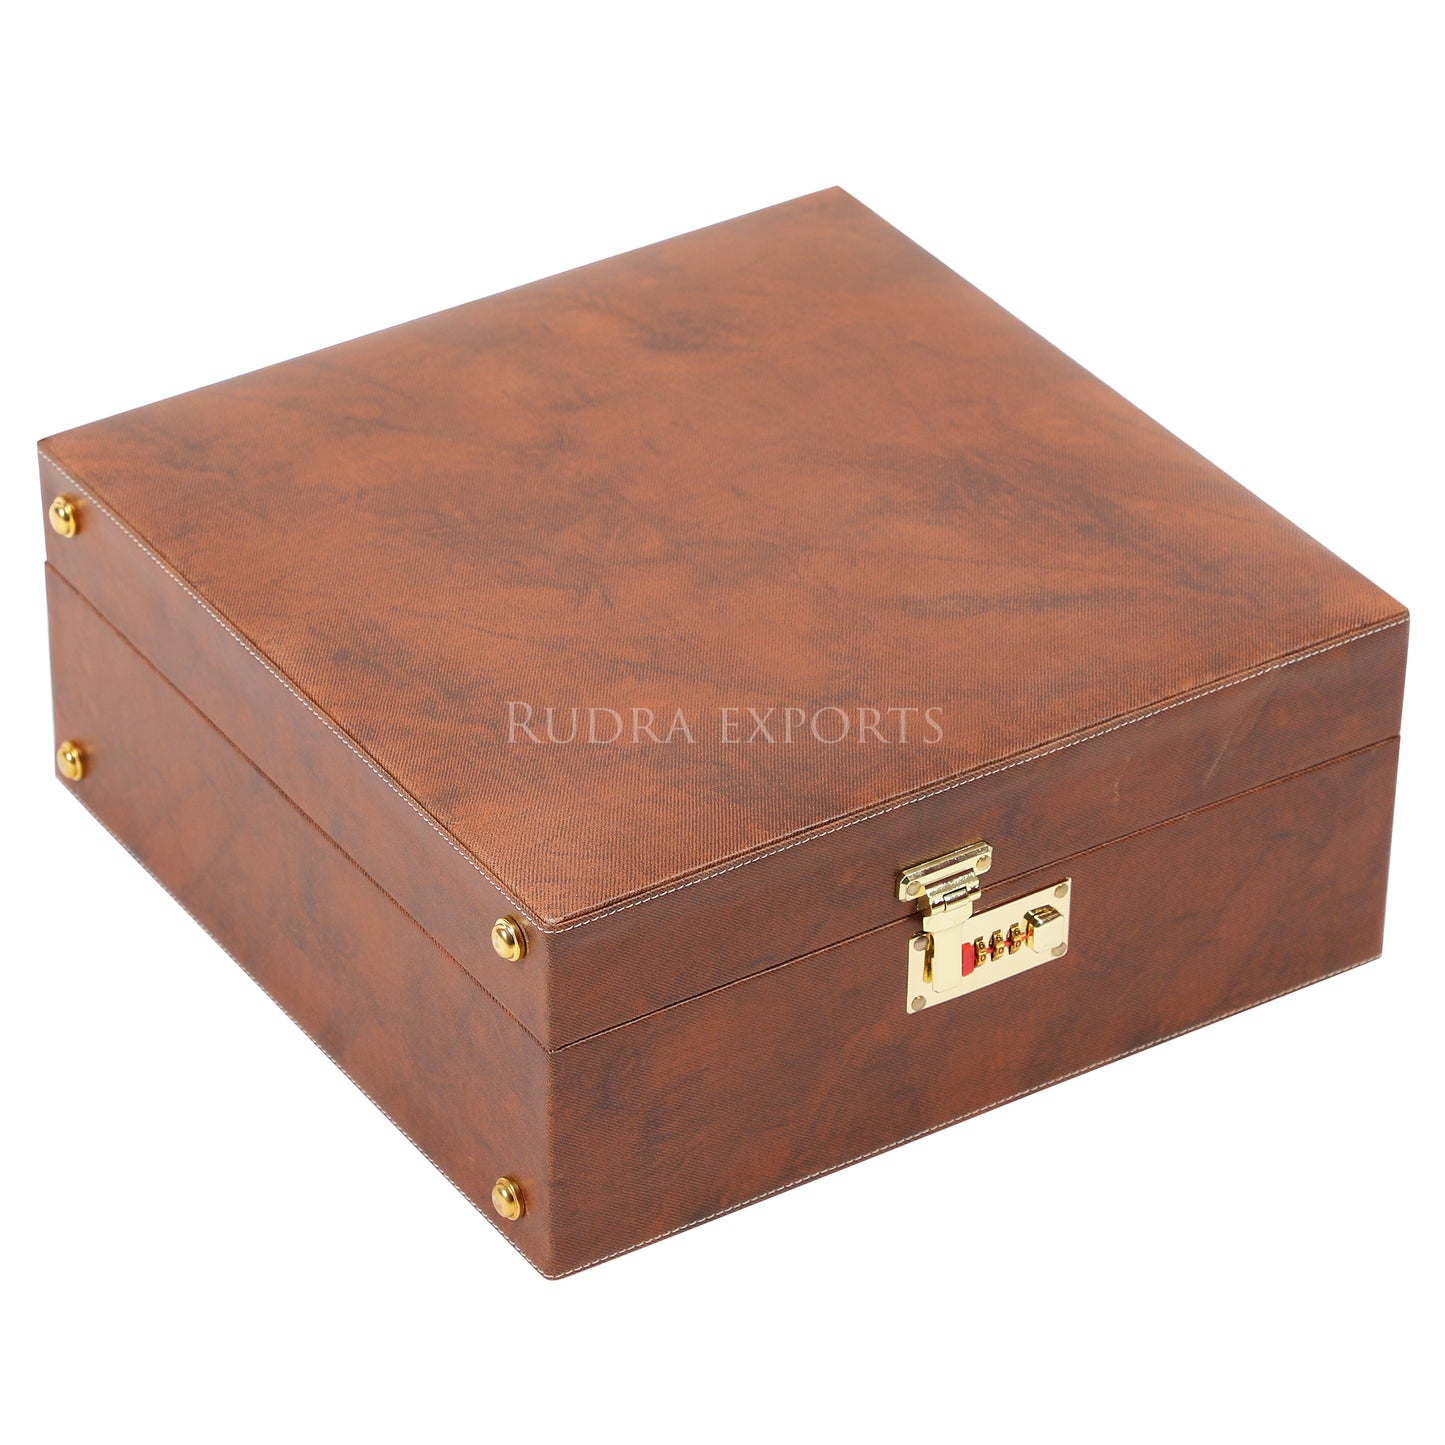 Rudra Exports Portable Leatherette Bar Set | Whisky Case | Wooden Bar Set for Picnic | Travel Bar Set (Holds 01 Bottle & 4 Whisky Glasses) Brown